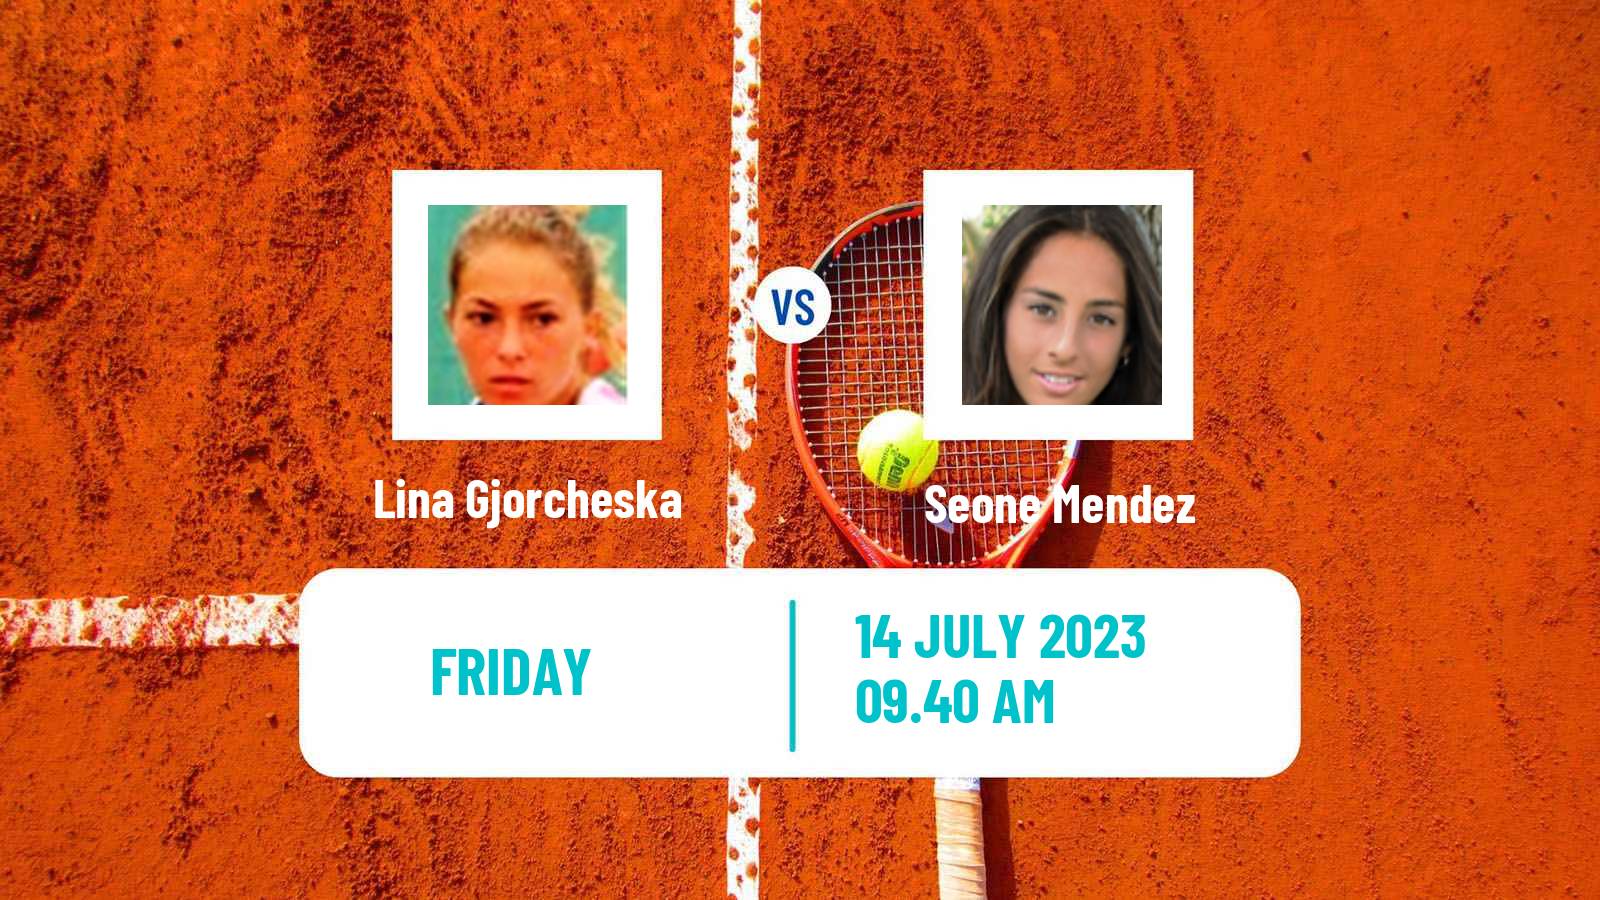 Tennis ITF W60 Rome 2 Women Lina Gjorcheska - Seone Mendez